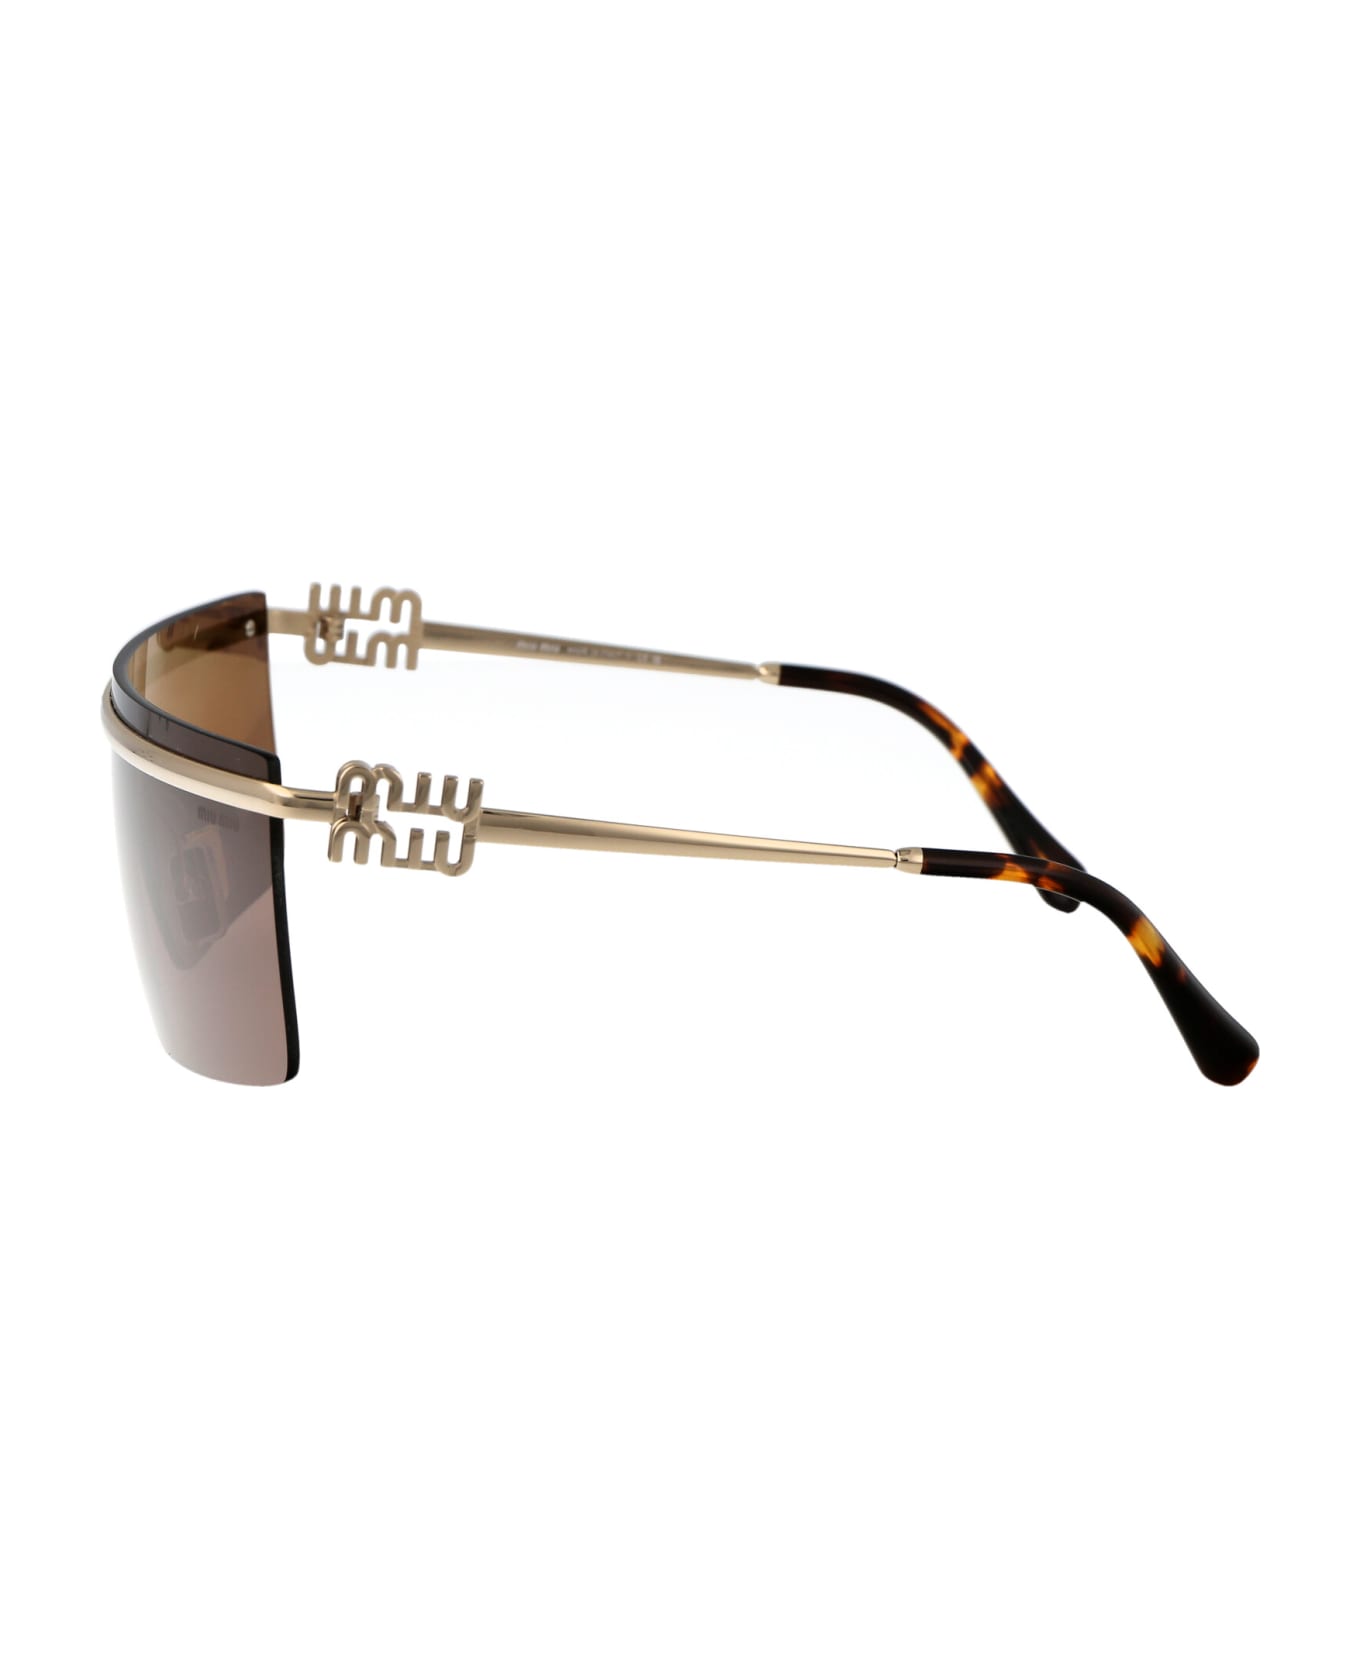 Miu Miu Eyewear 0mu 50zs Sunglasses - ZVN70D Pale Gold